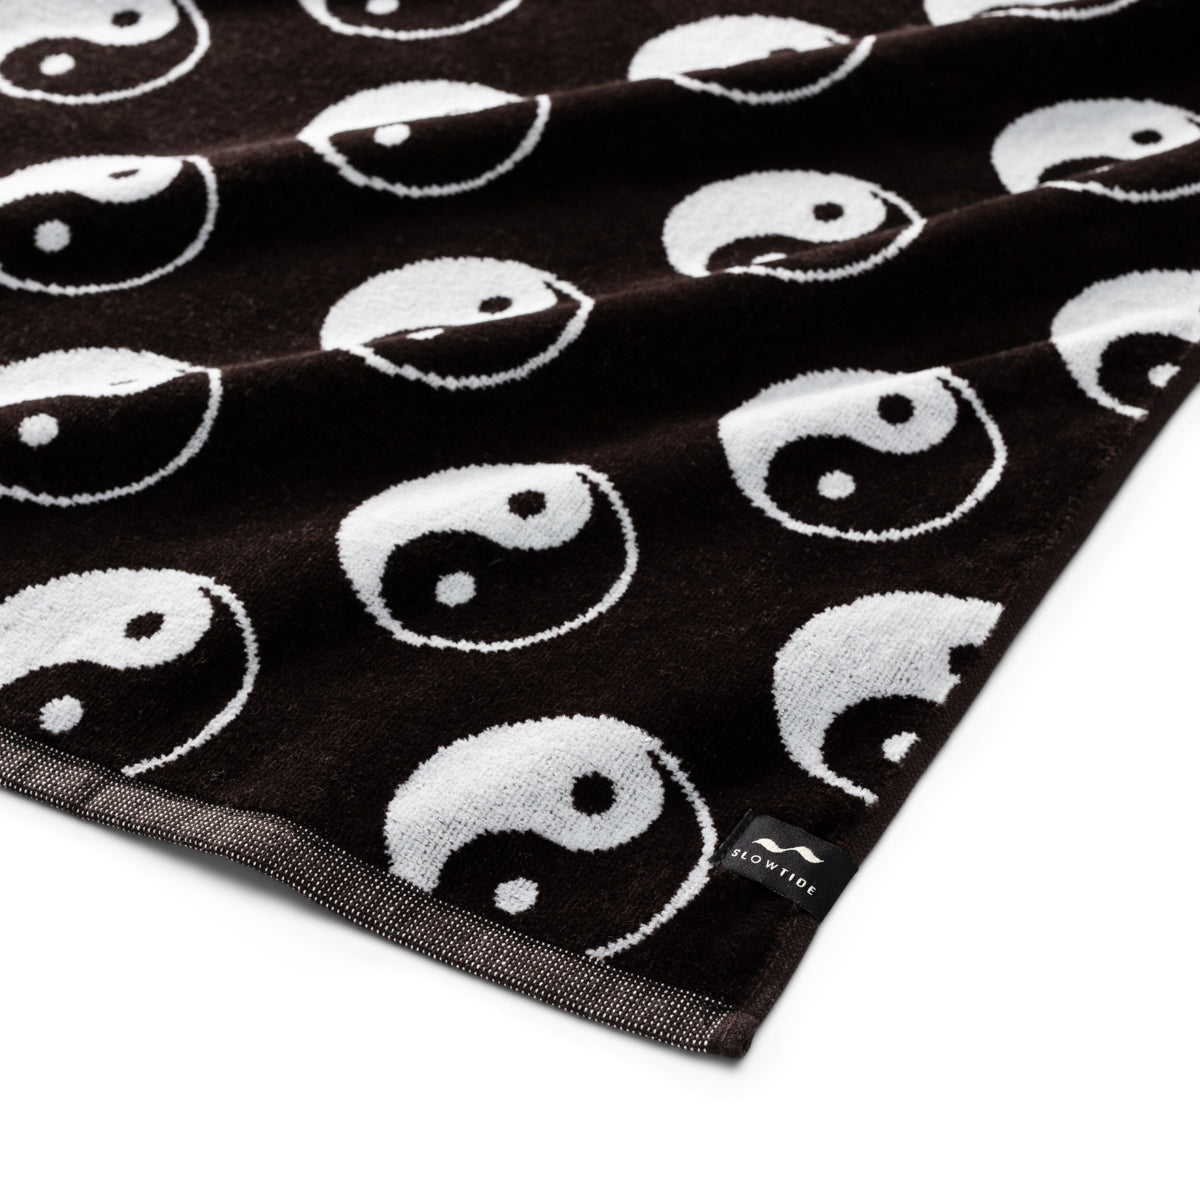 Hand Towel Premium Kitchen Panda Hand Towels with Hanging Loop